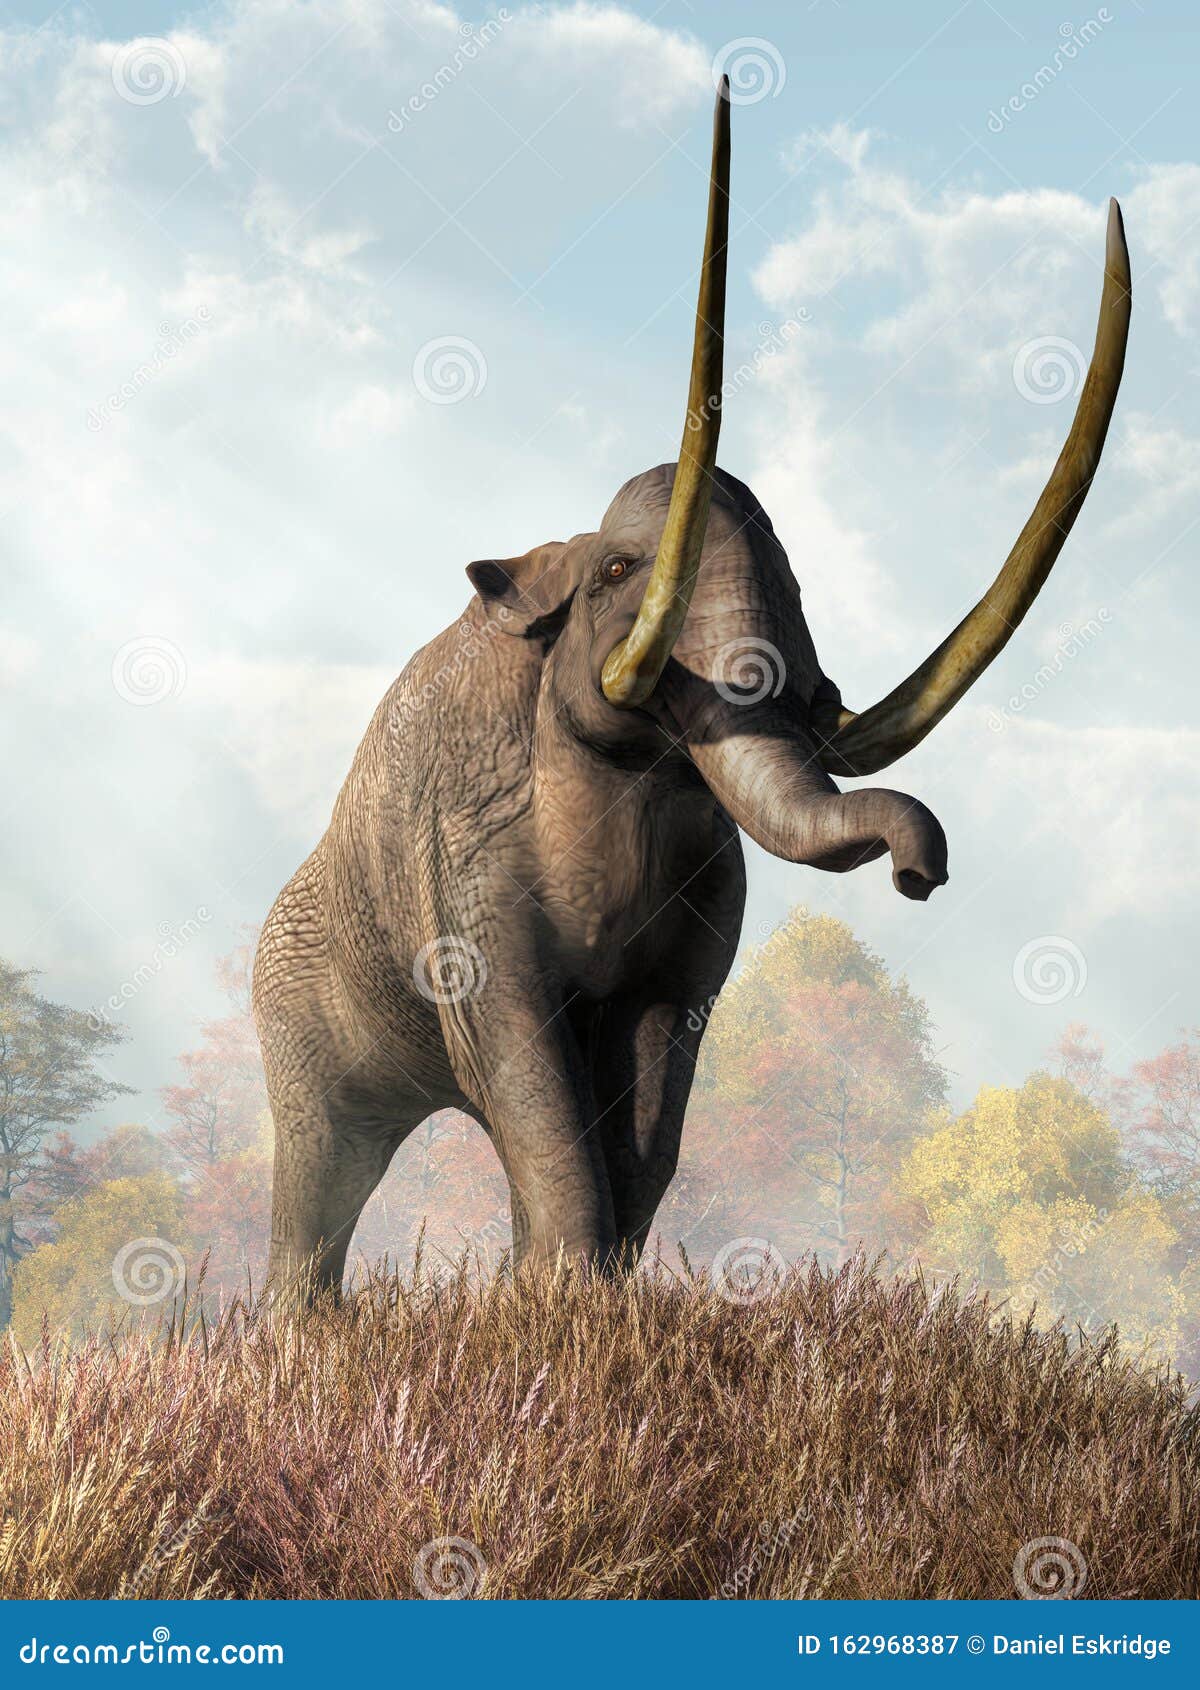 columbian mammoth on a hill